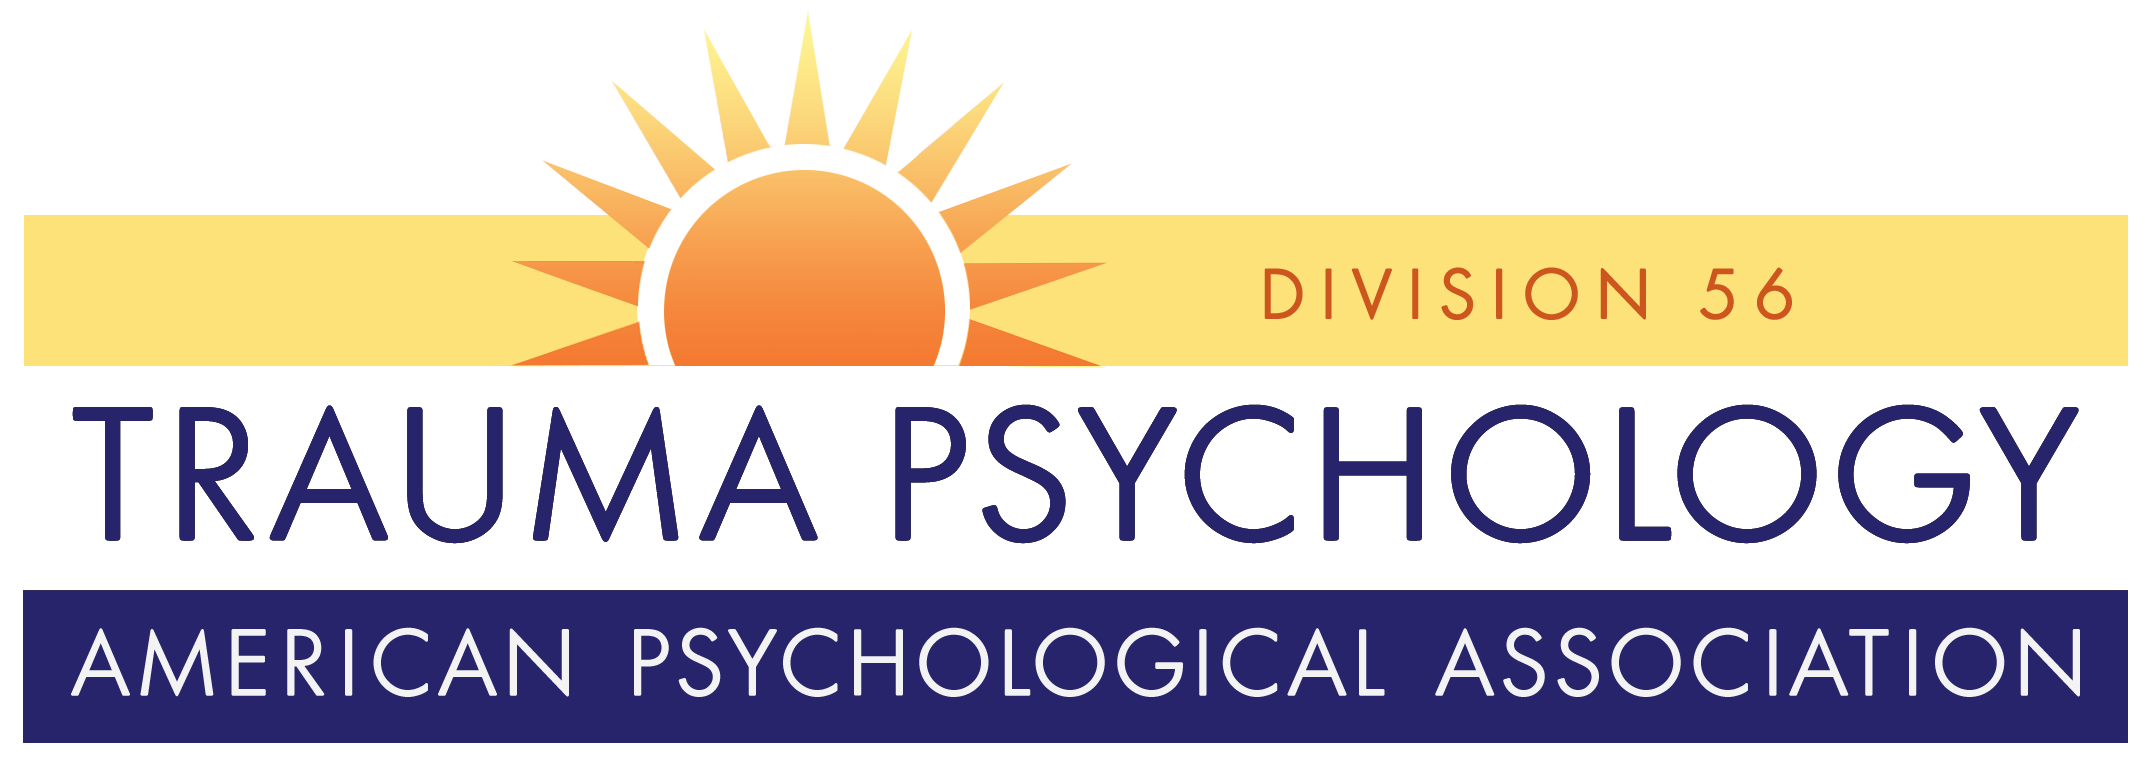 Division 56 APA Trauma Psychology Division